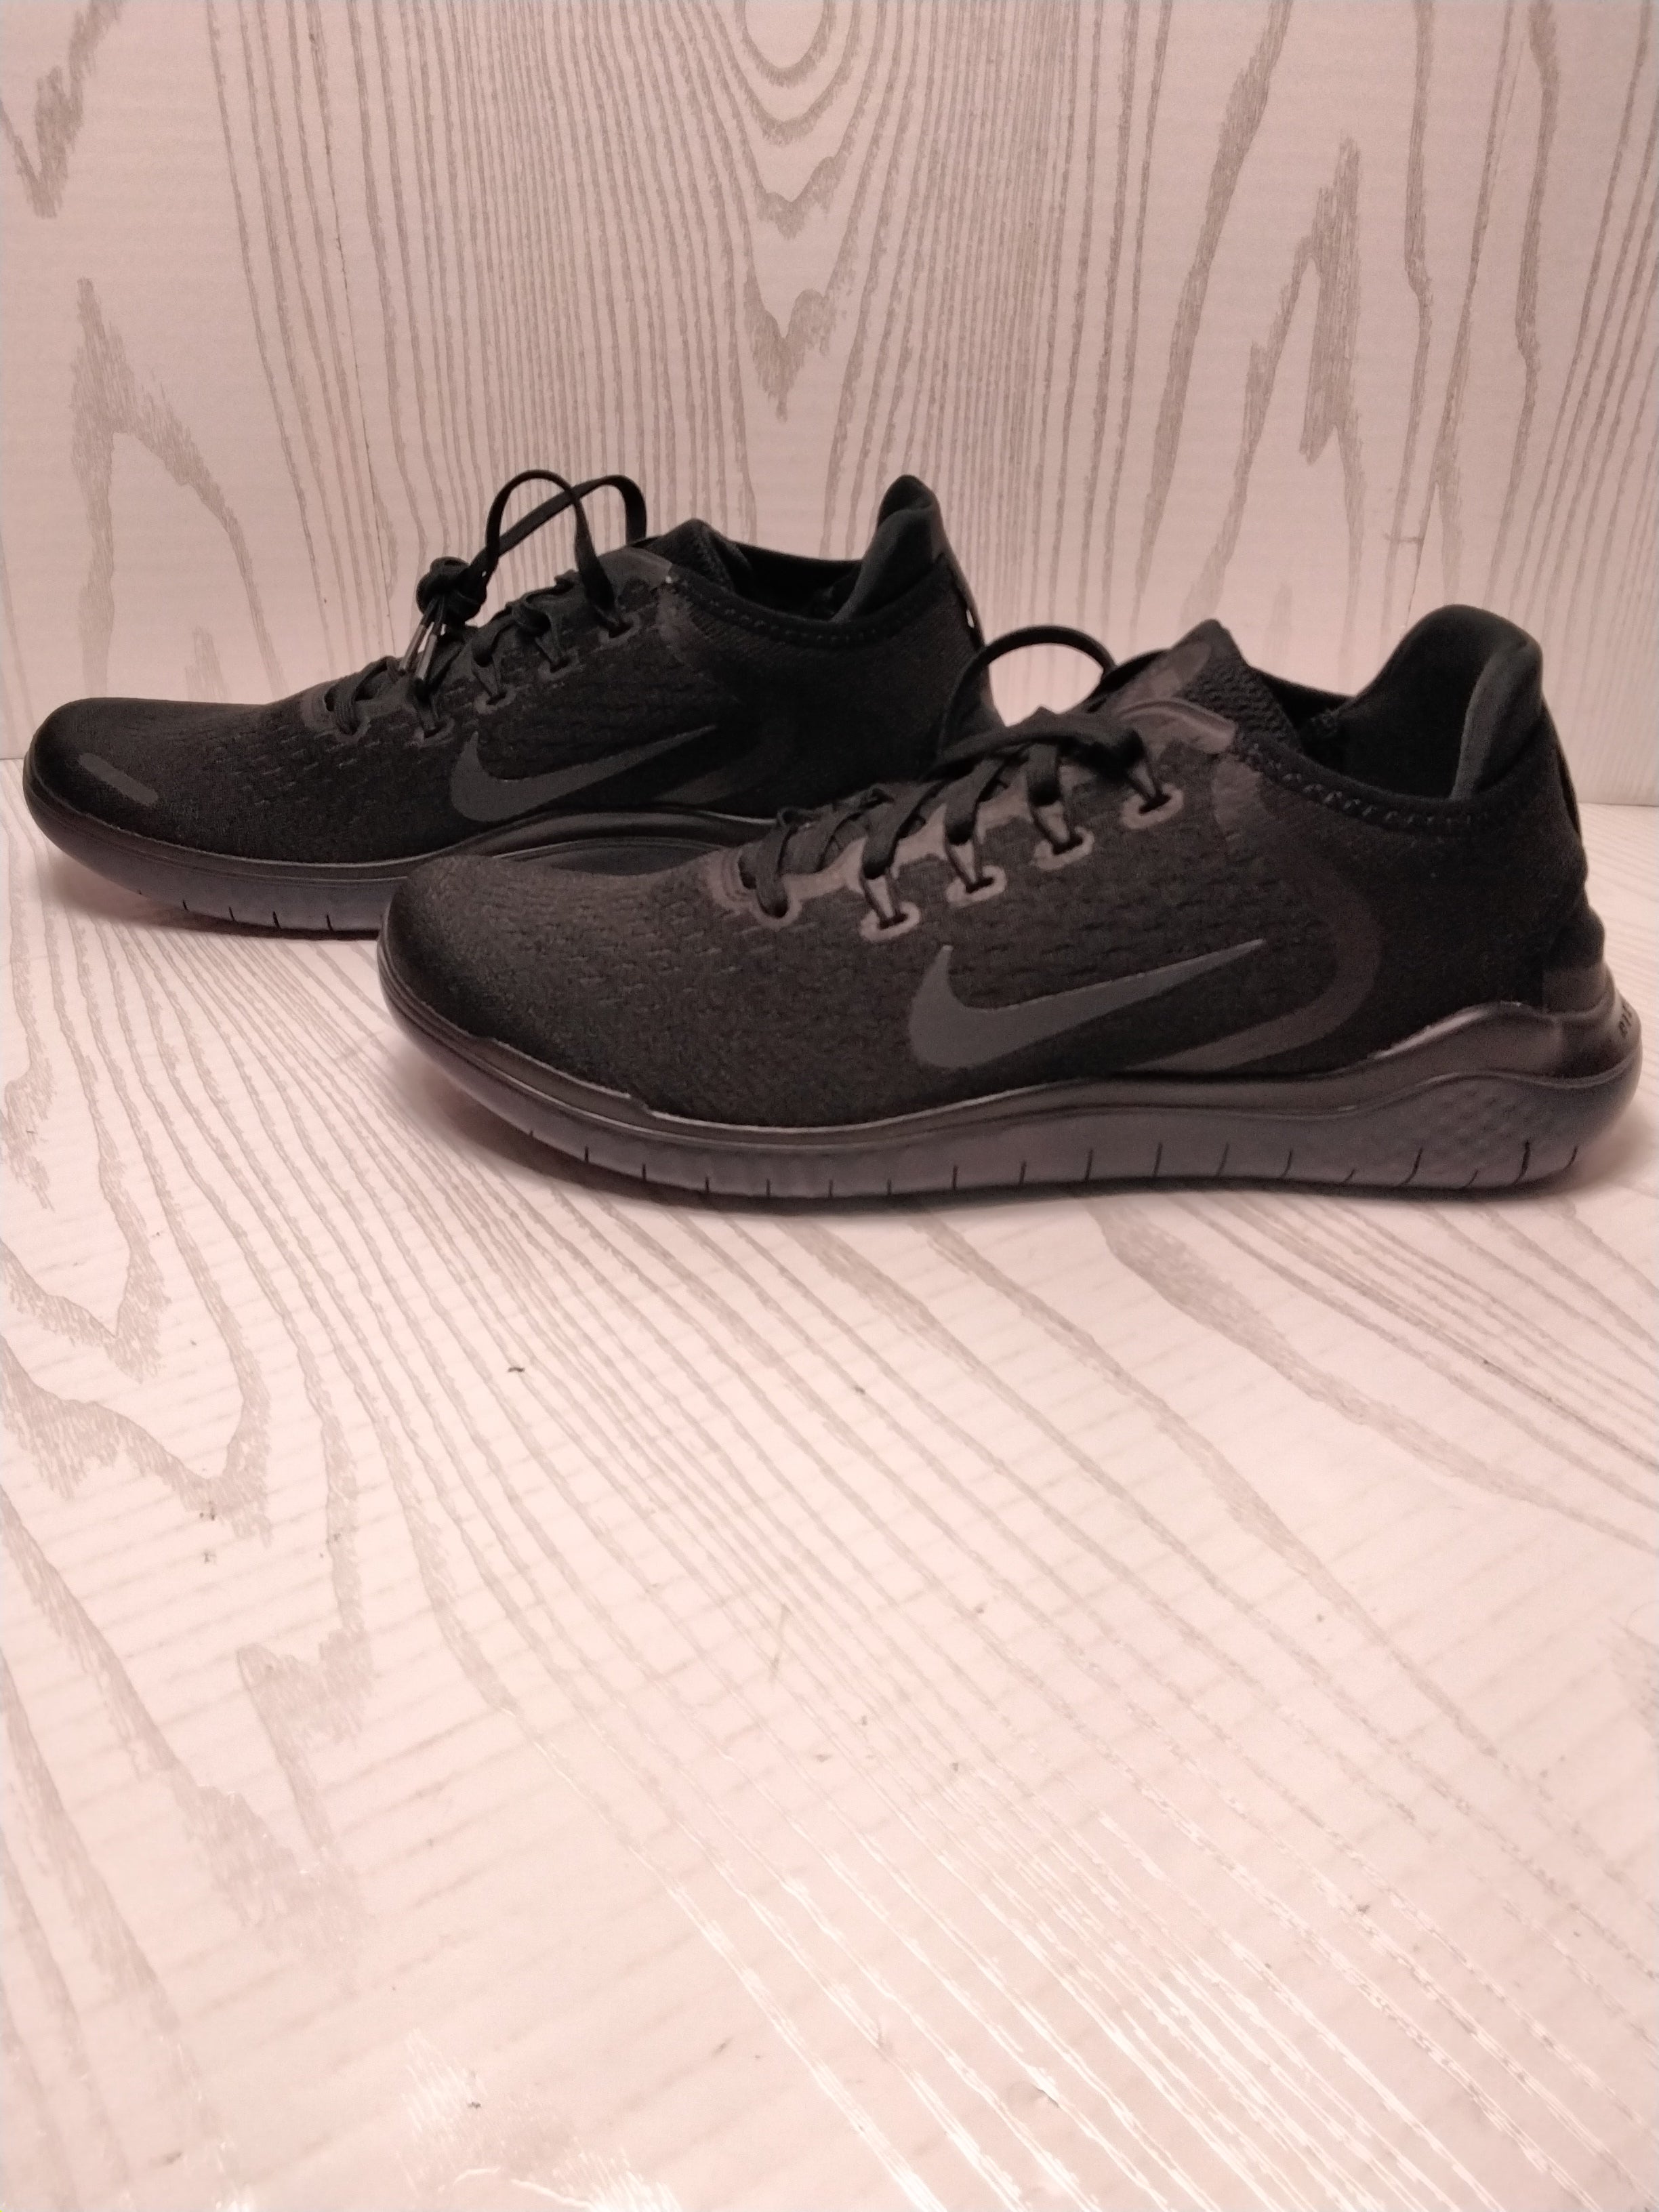 Nike Mens Free Rn 2018 Running Shoe, Black/Anthracite - Size 10.5 (7868899623150)